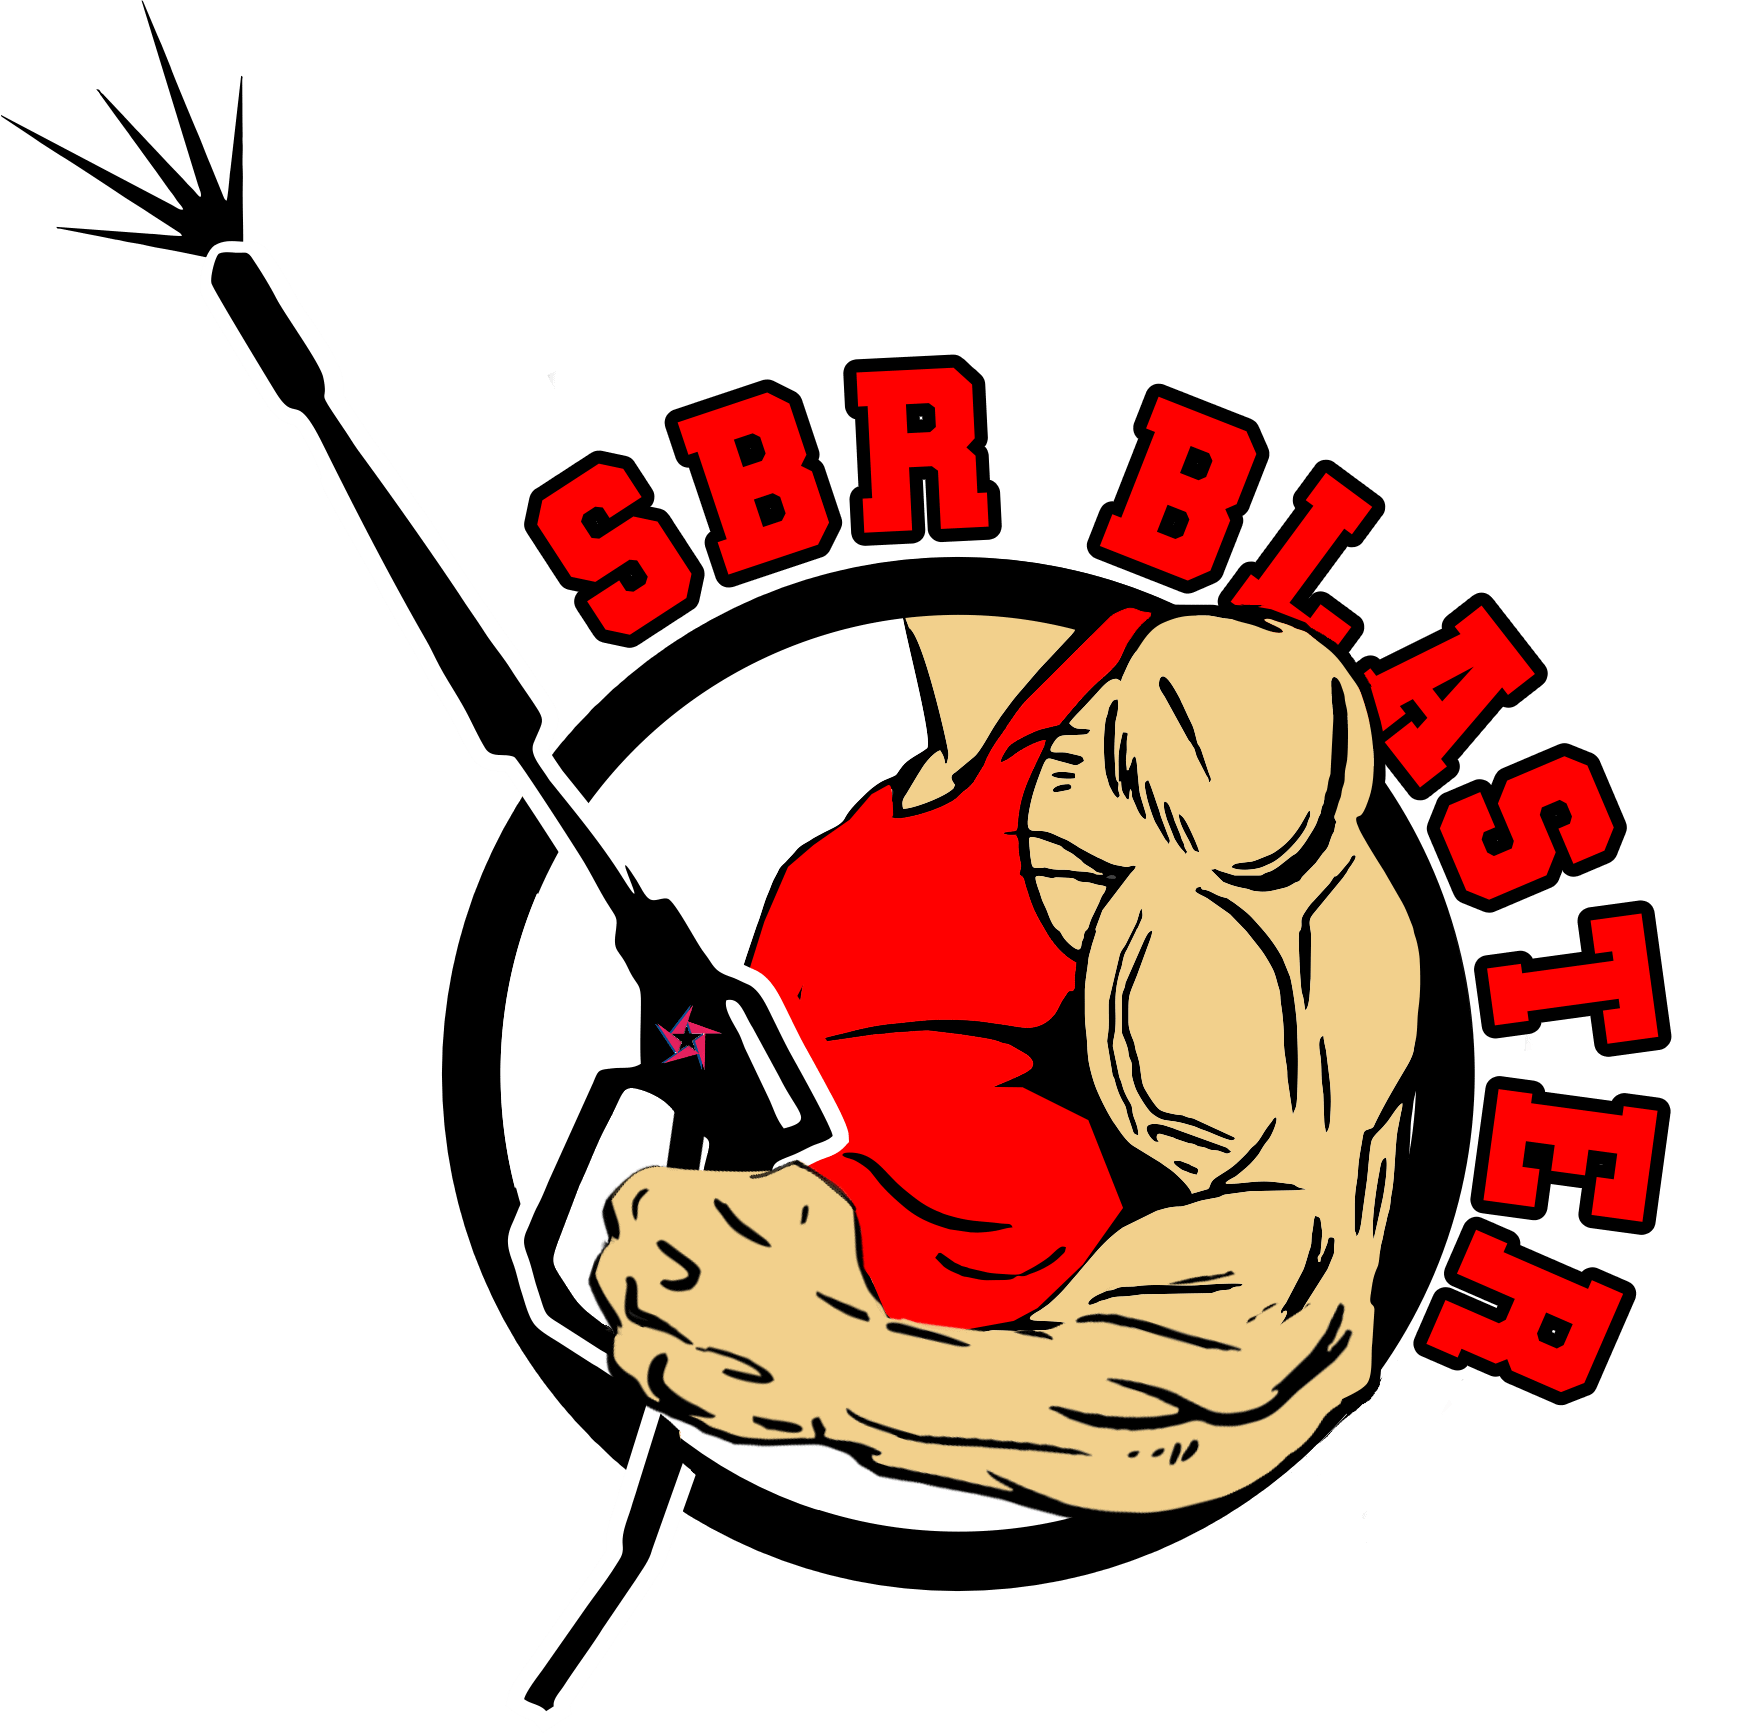 sbr blaster logo 2